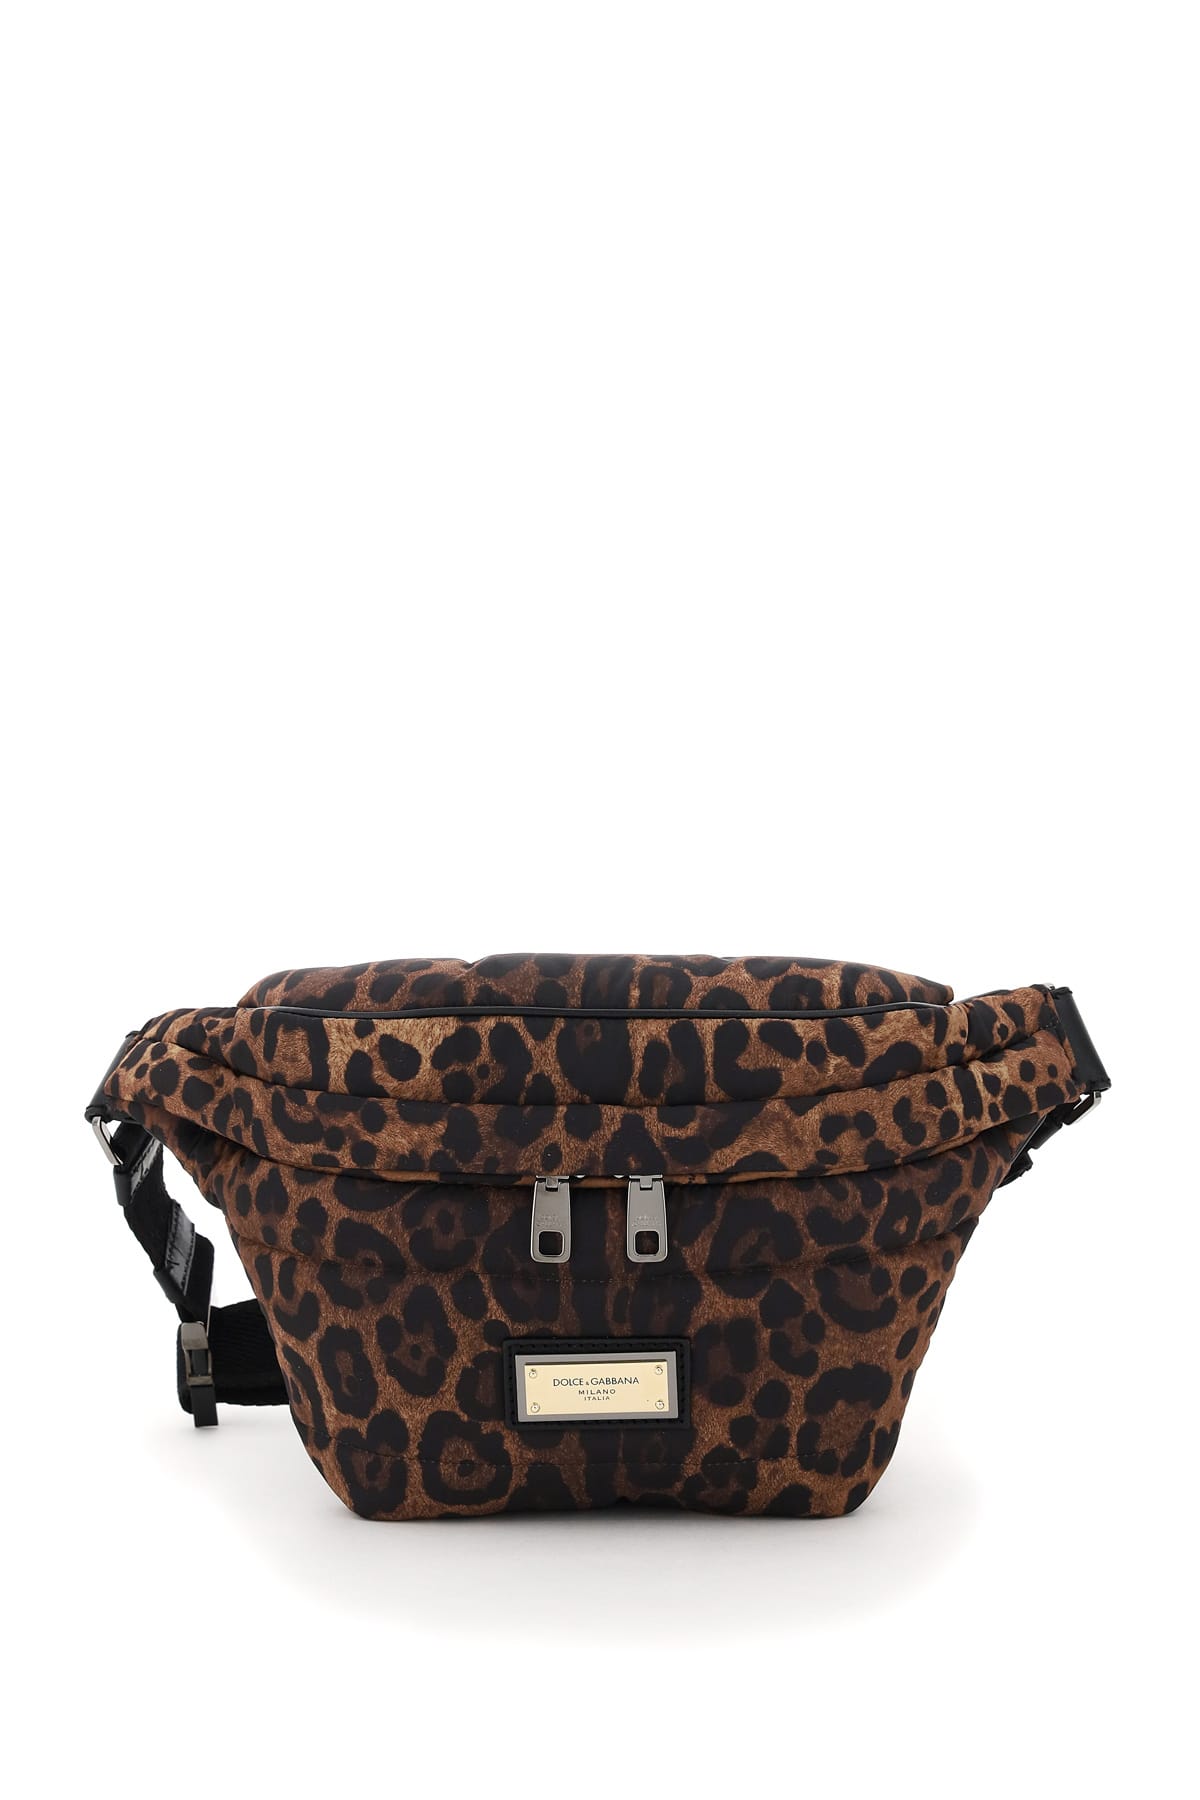 Dolce & Gabbana Leopard-print Nylon Beltbag